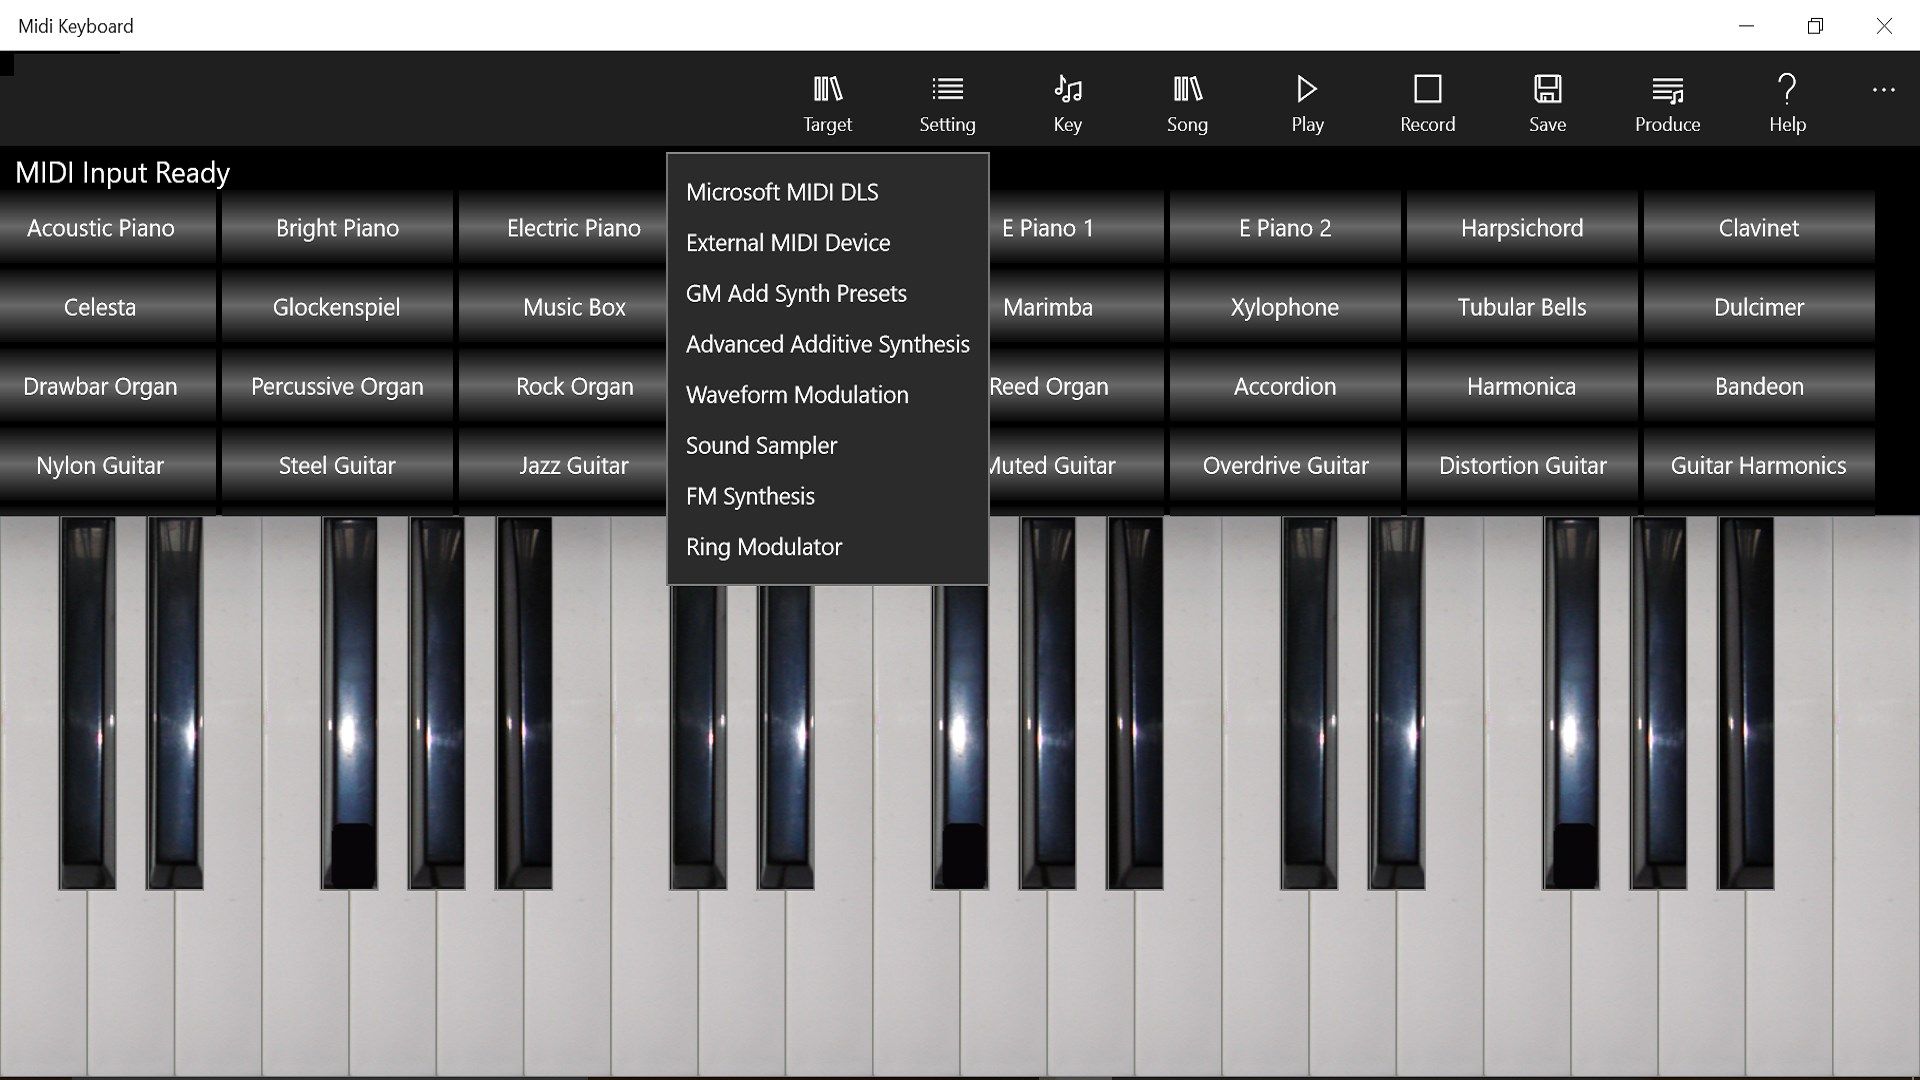 MIDI Keyboard with many synthesizer targets.